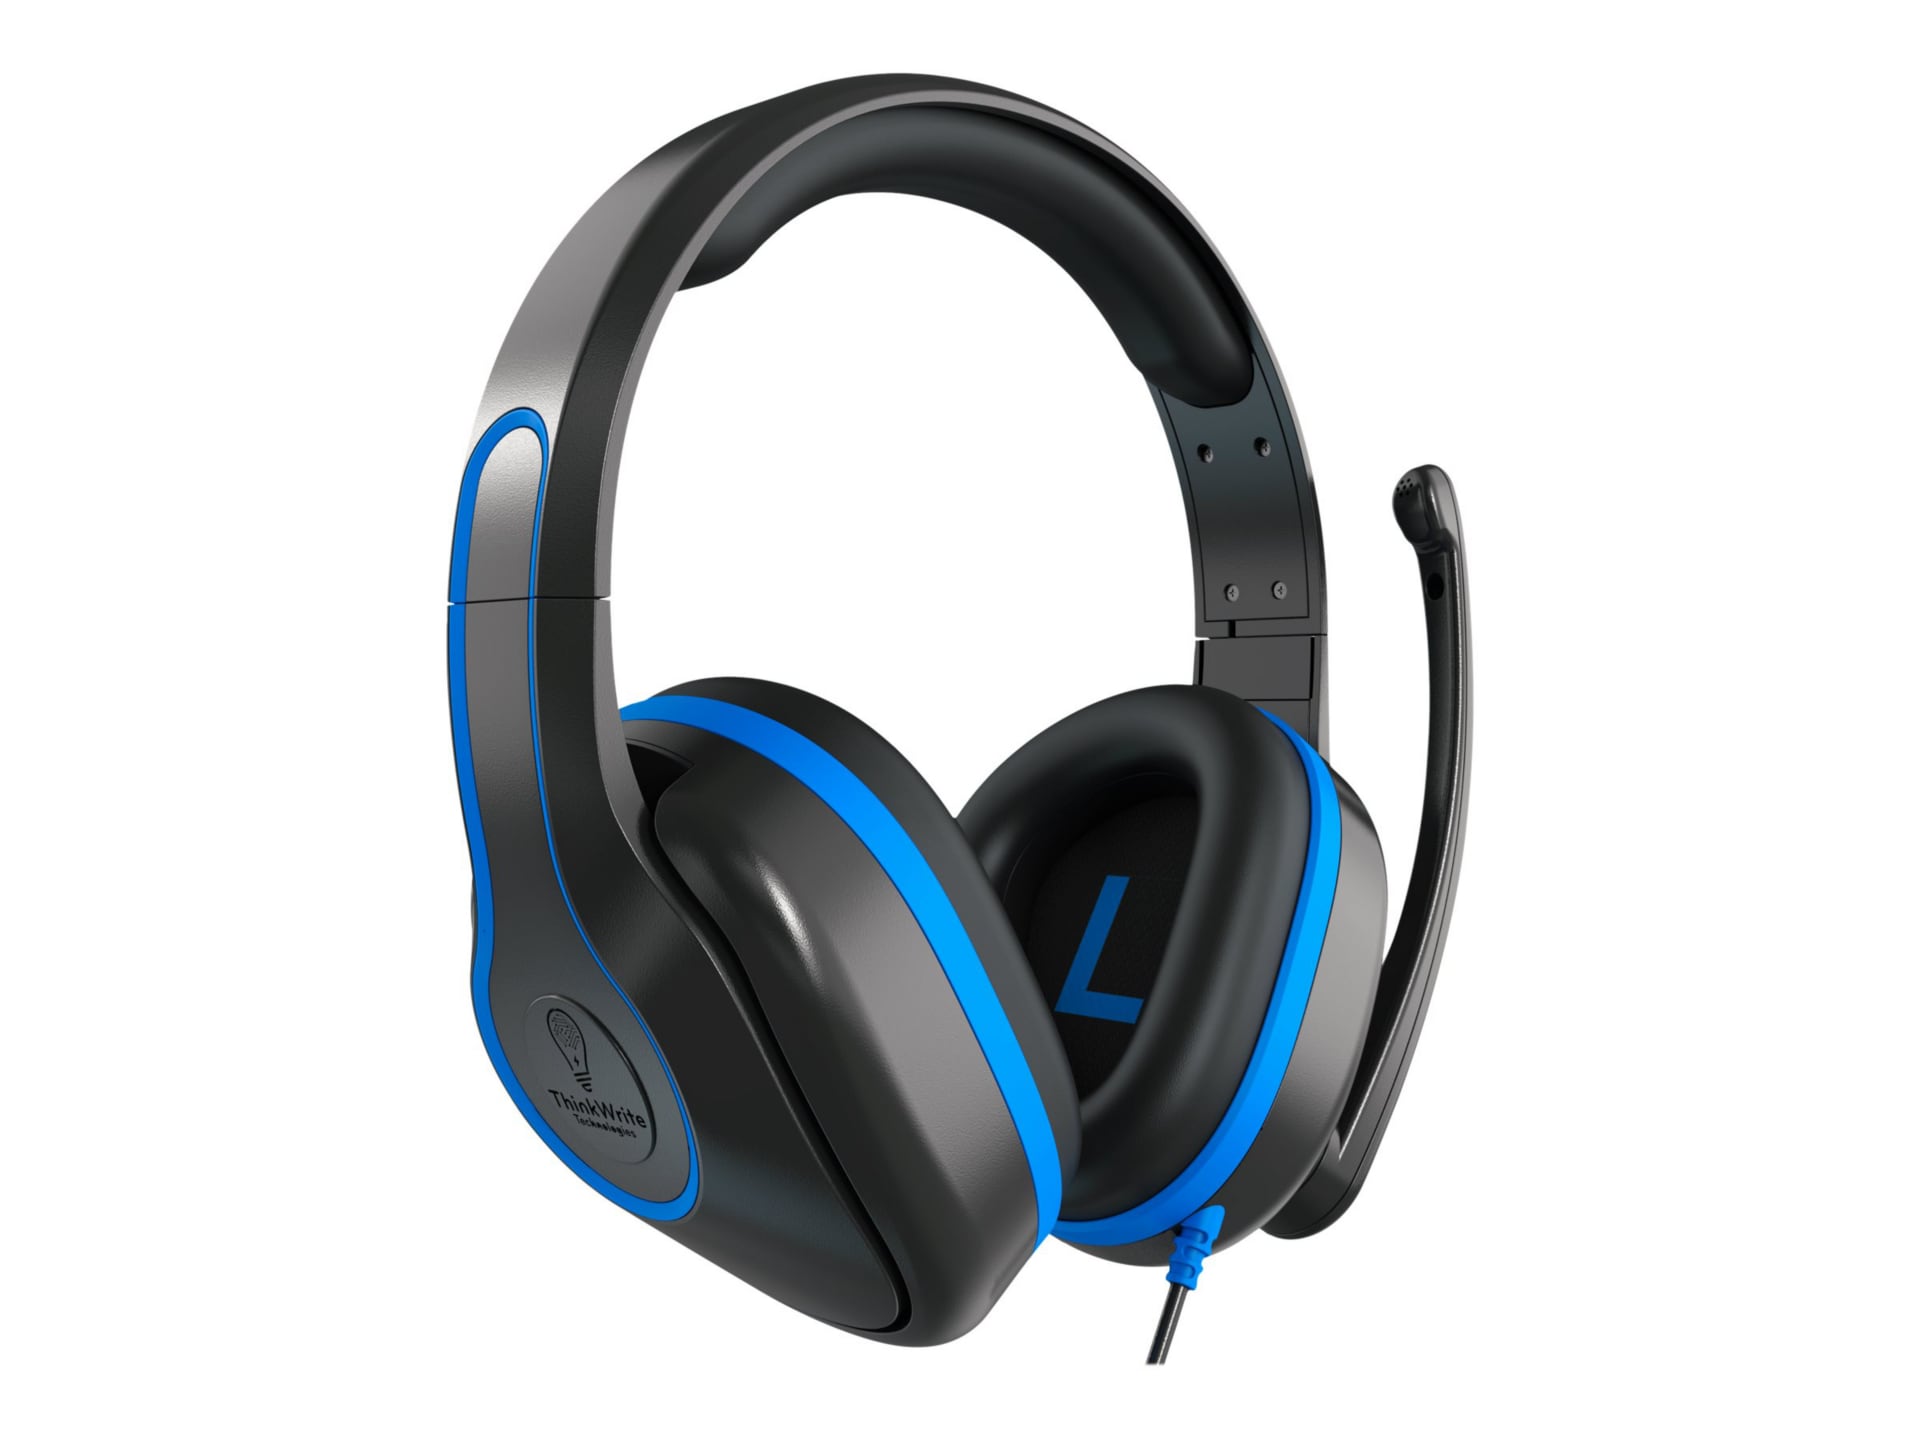 TWT Audio REVO TW330 - wired headset - USB-C plug - black and blue